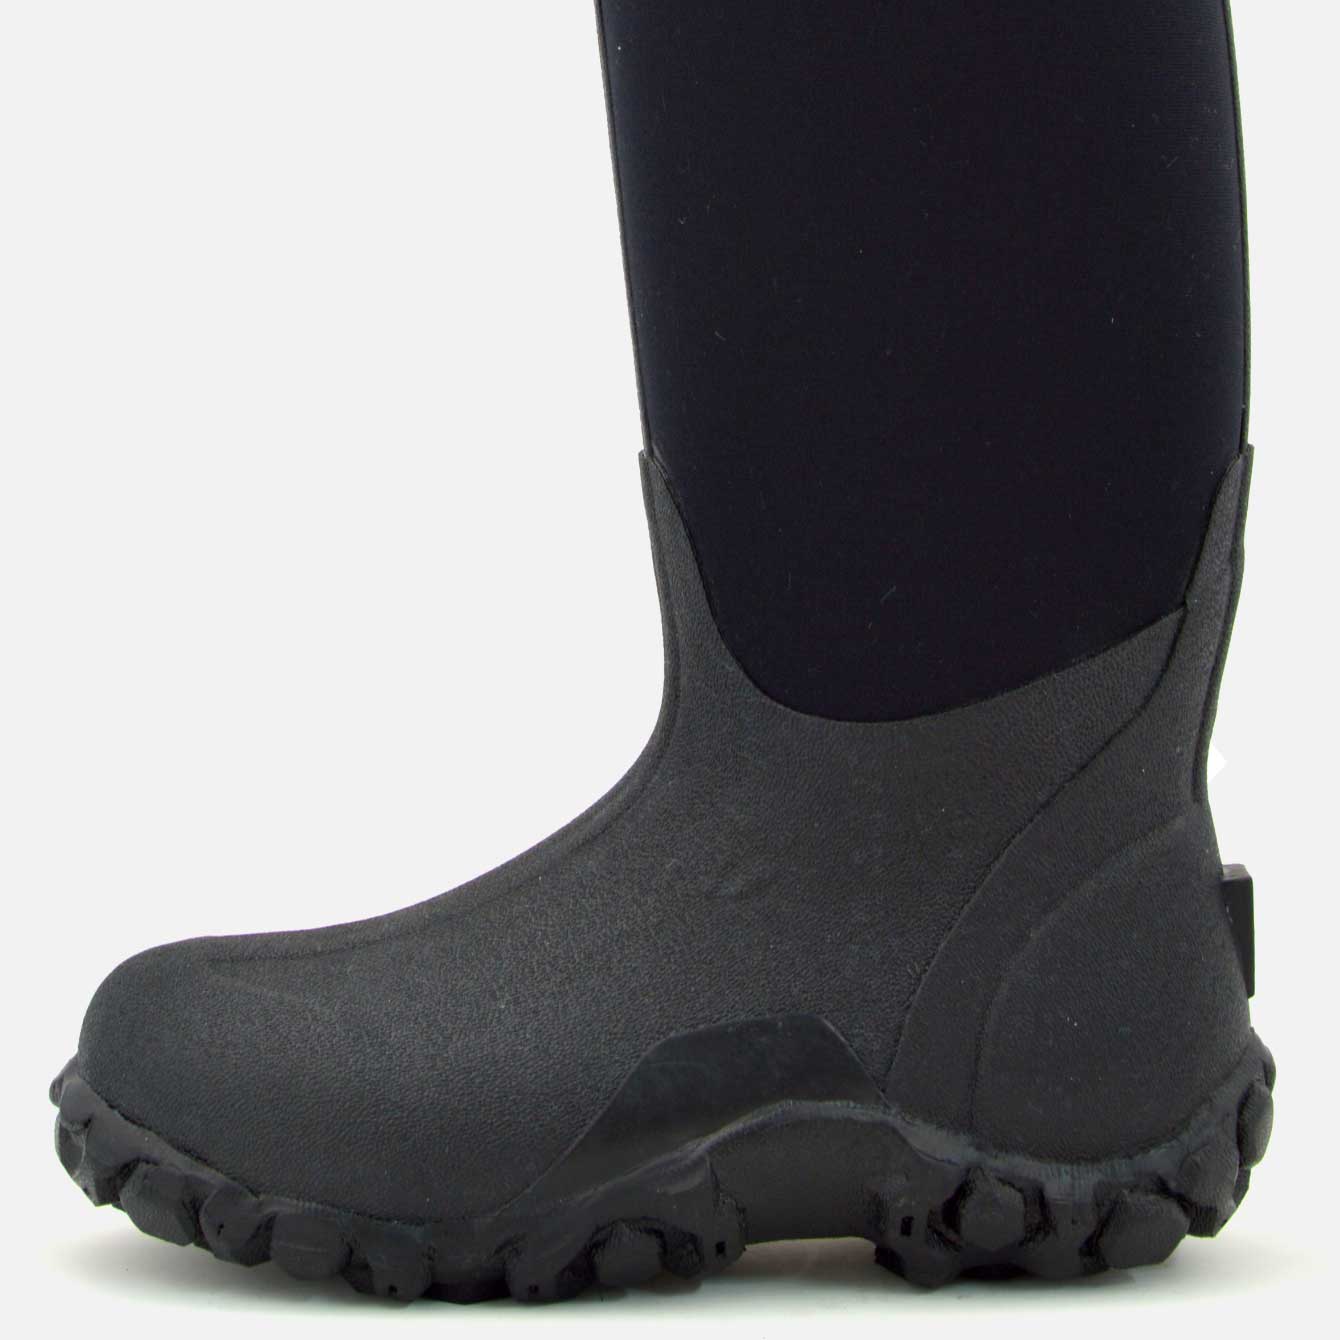 rain boots sydney